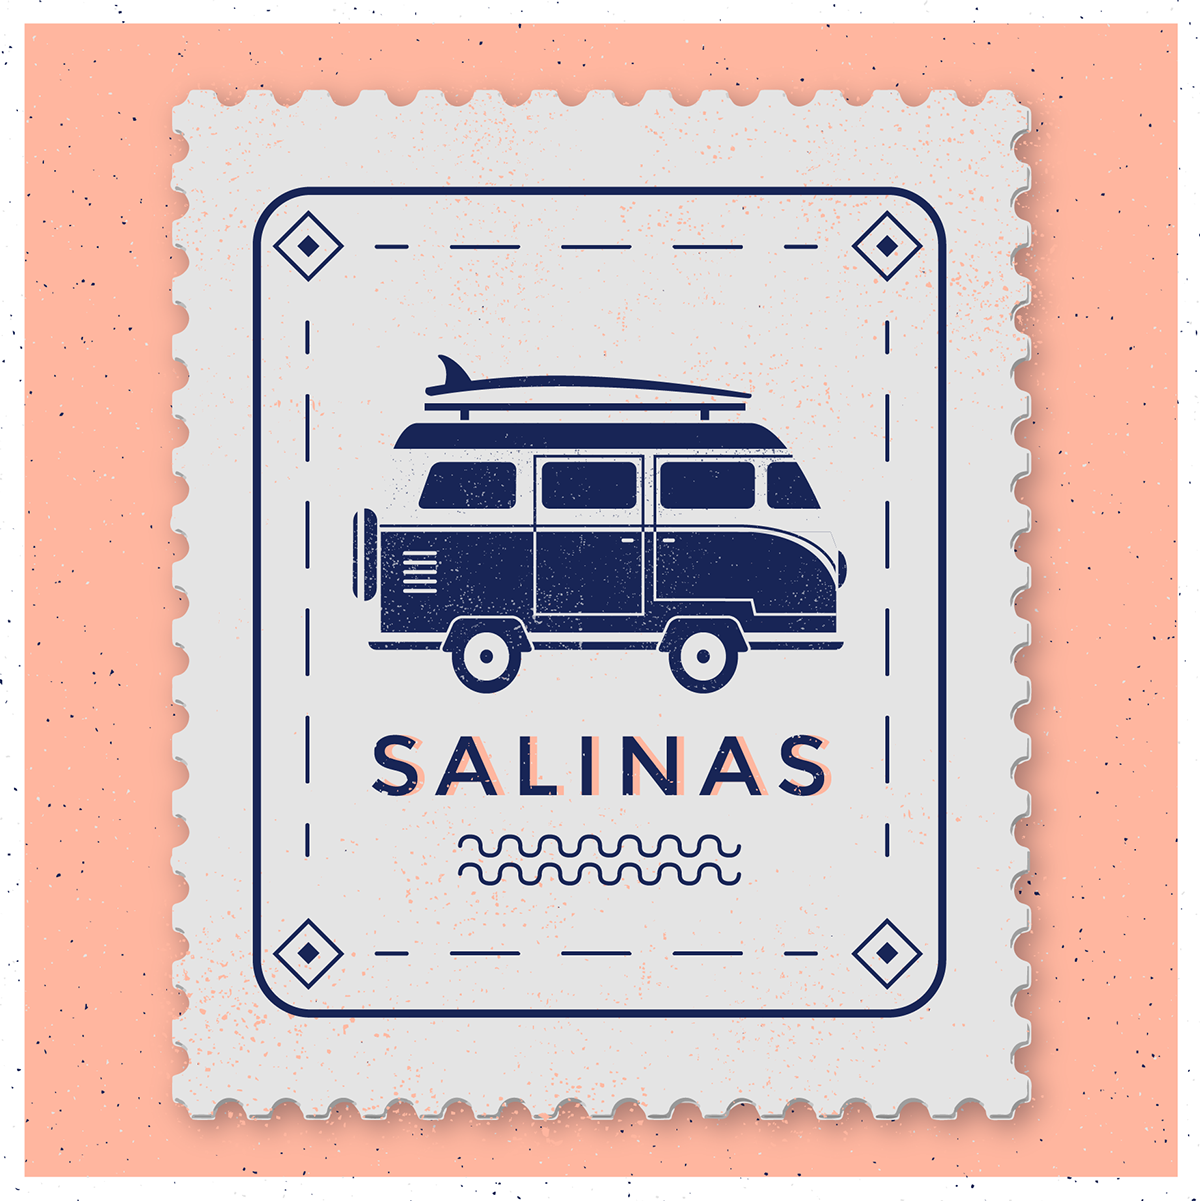 salinas asturias stamp Stamp Design Collection salinas stamps msinclan maria suarez inclan anchor ice cream cider illo Surf